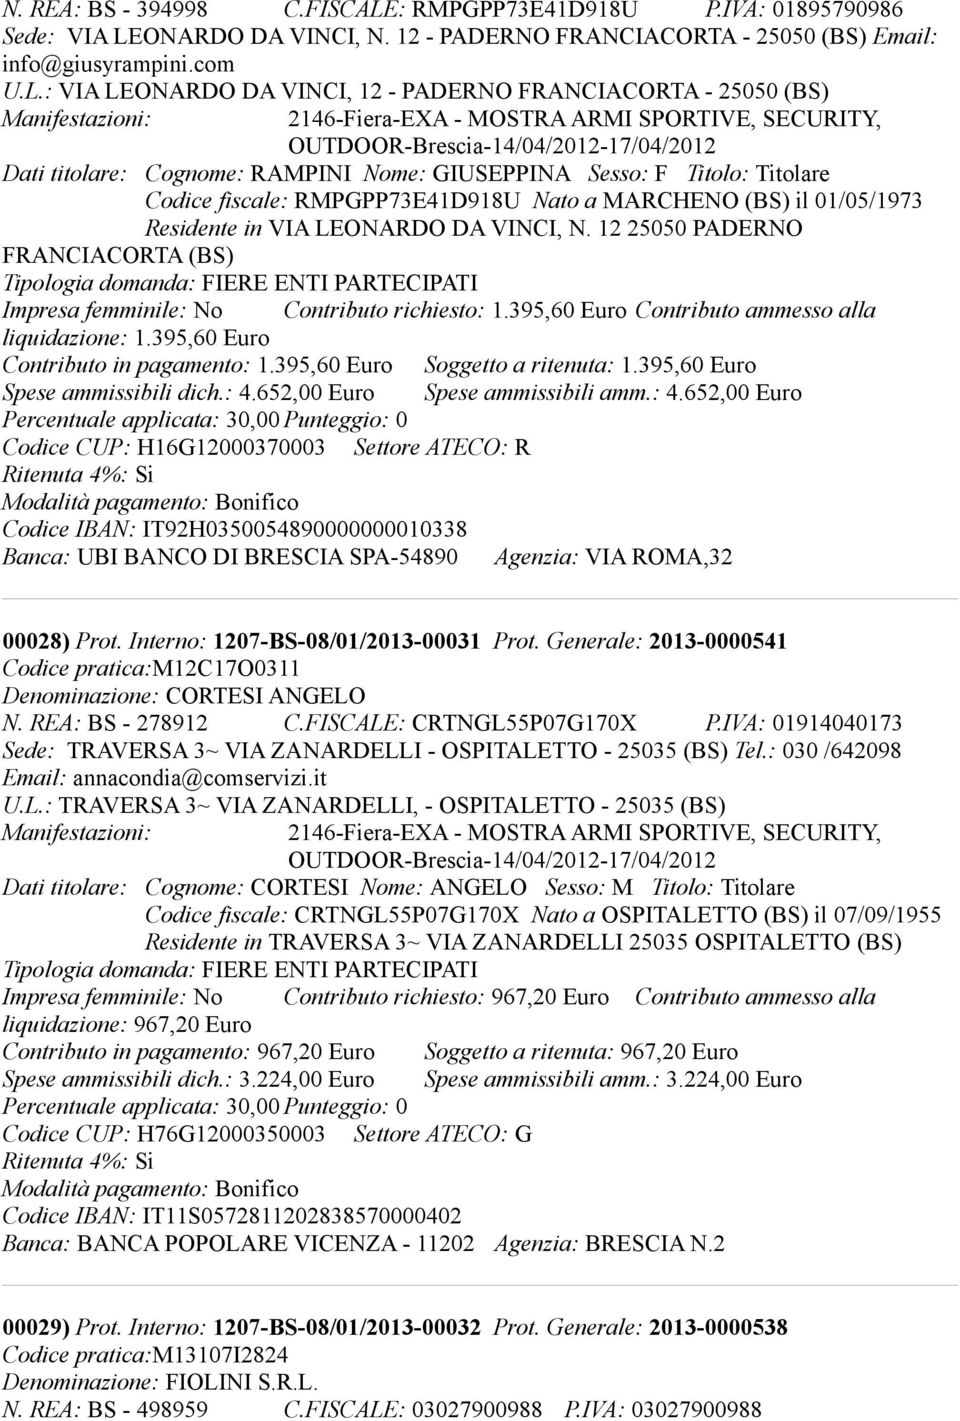 ONARDO DA VINCI, N. 12 - PADERNO FRANCIACORTA - 25050 (BS) Email: info@giusyrampini.com U.L.